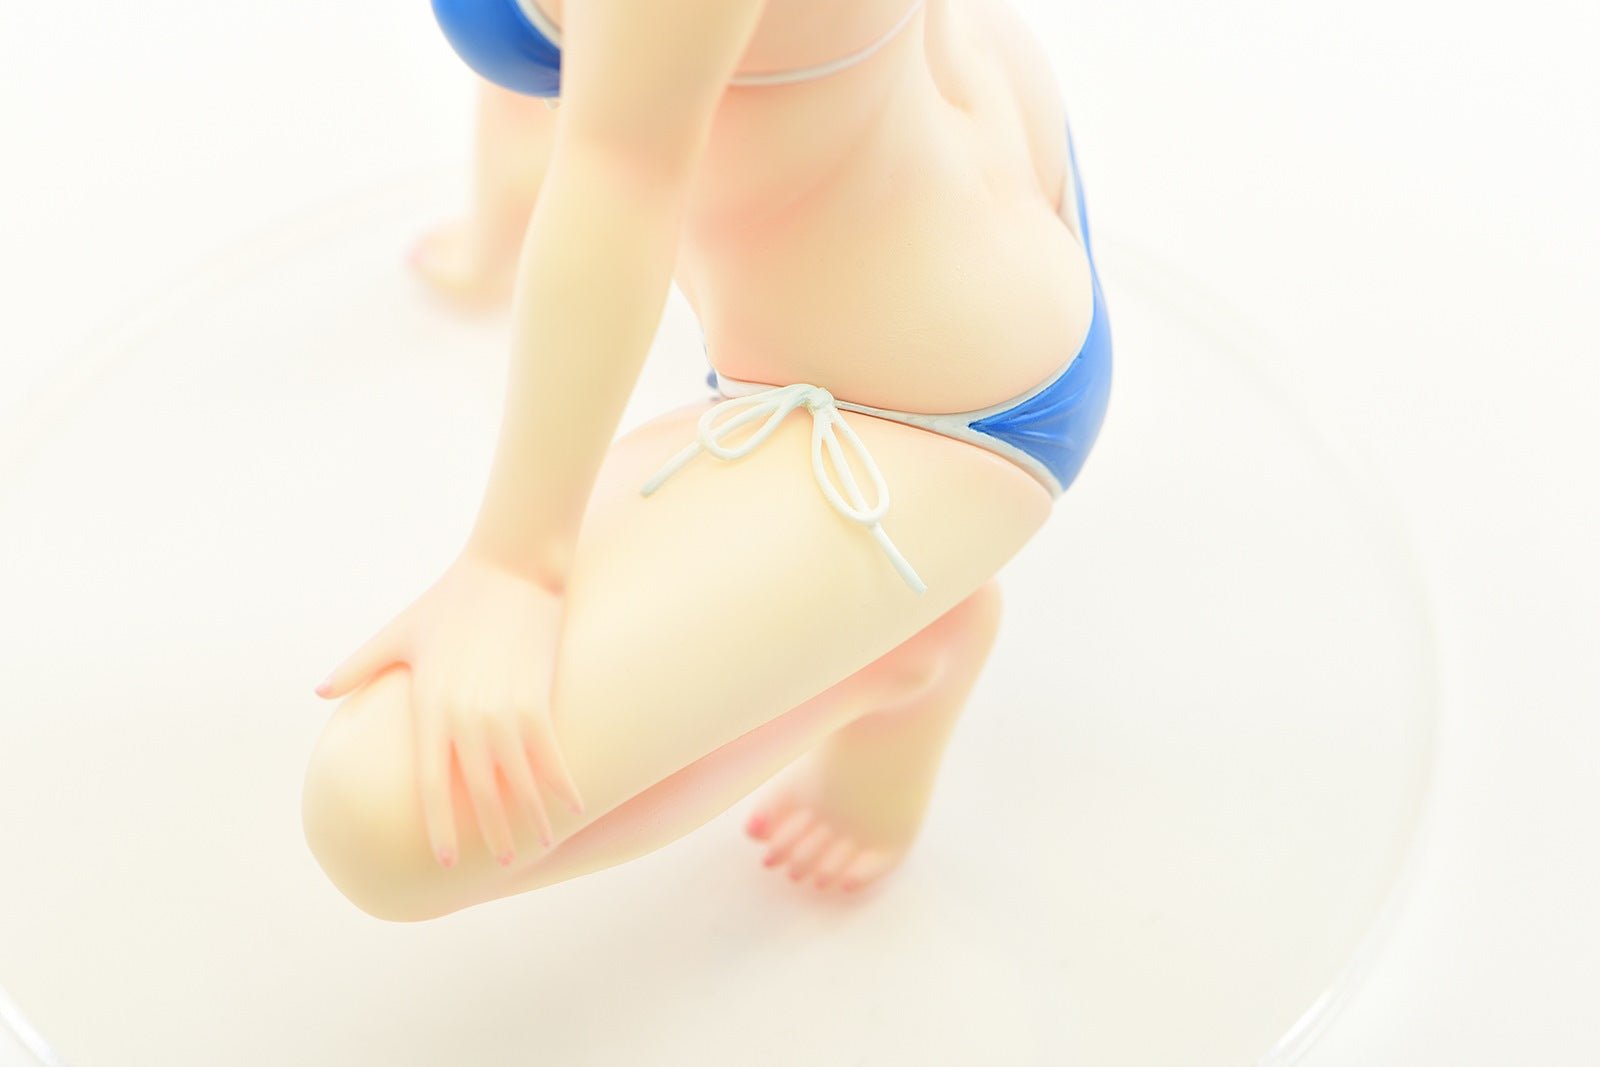 Kana Kojima 1/5.5 Swimsuit Gravure_Style Figure -- Nande Koko ni